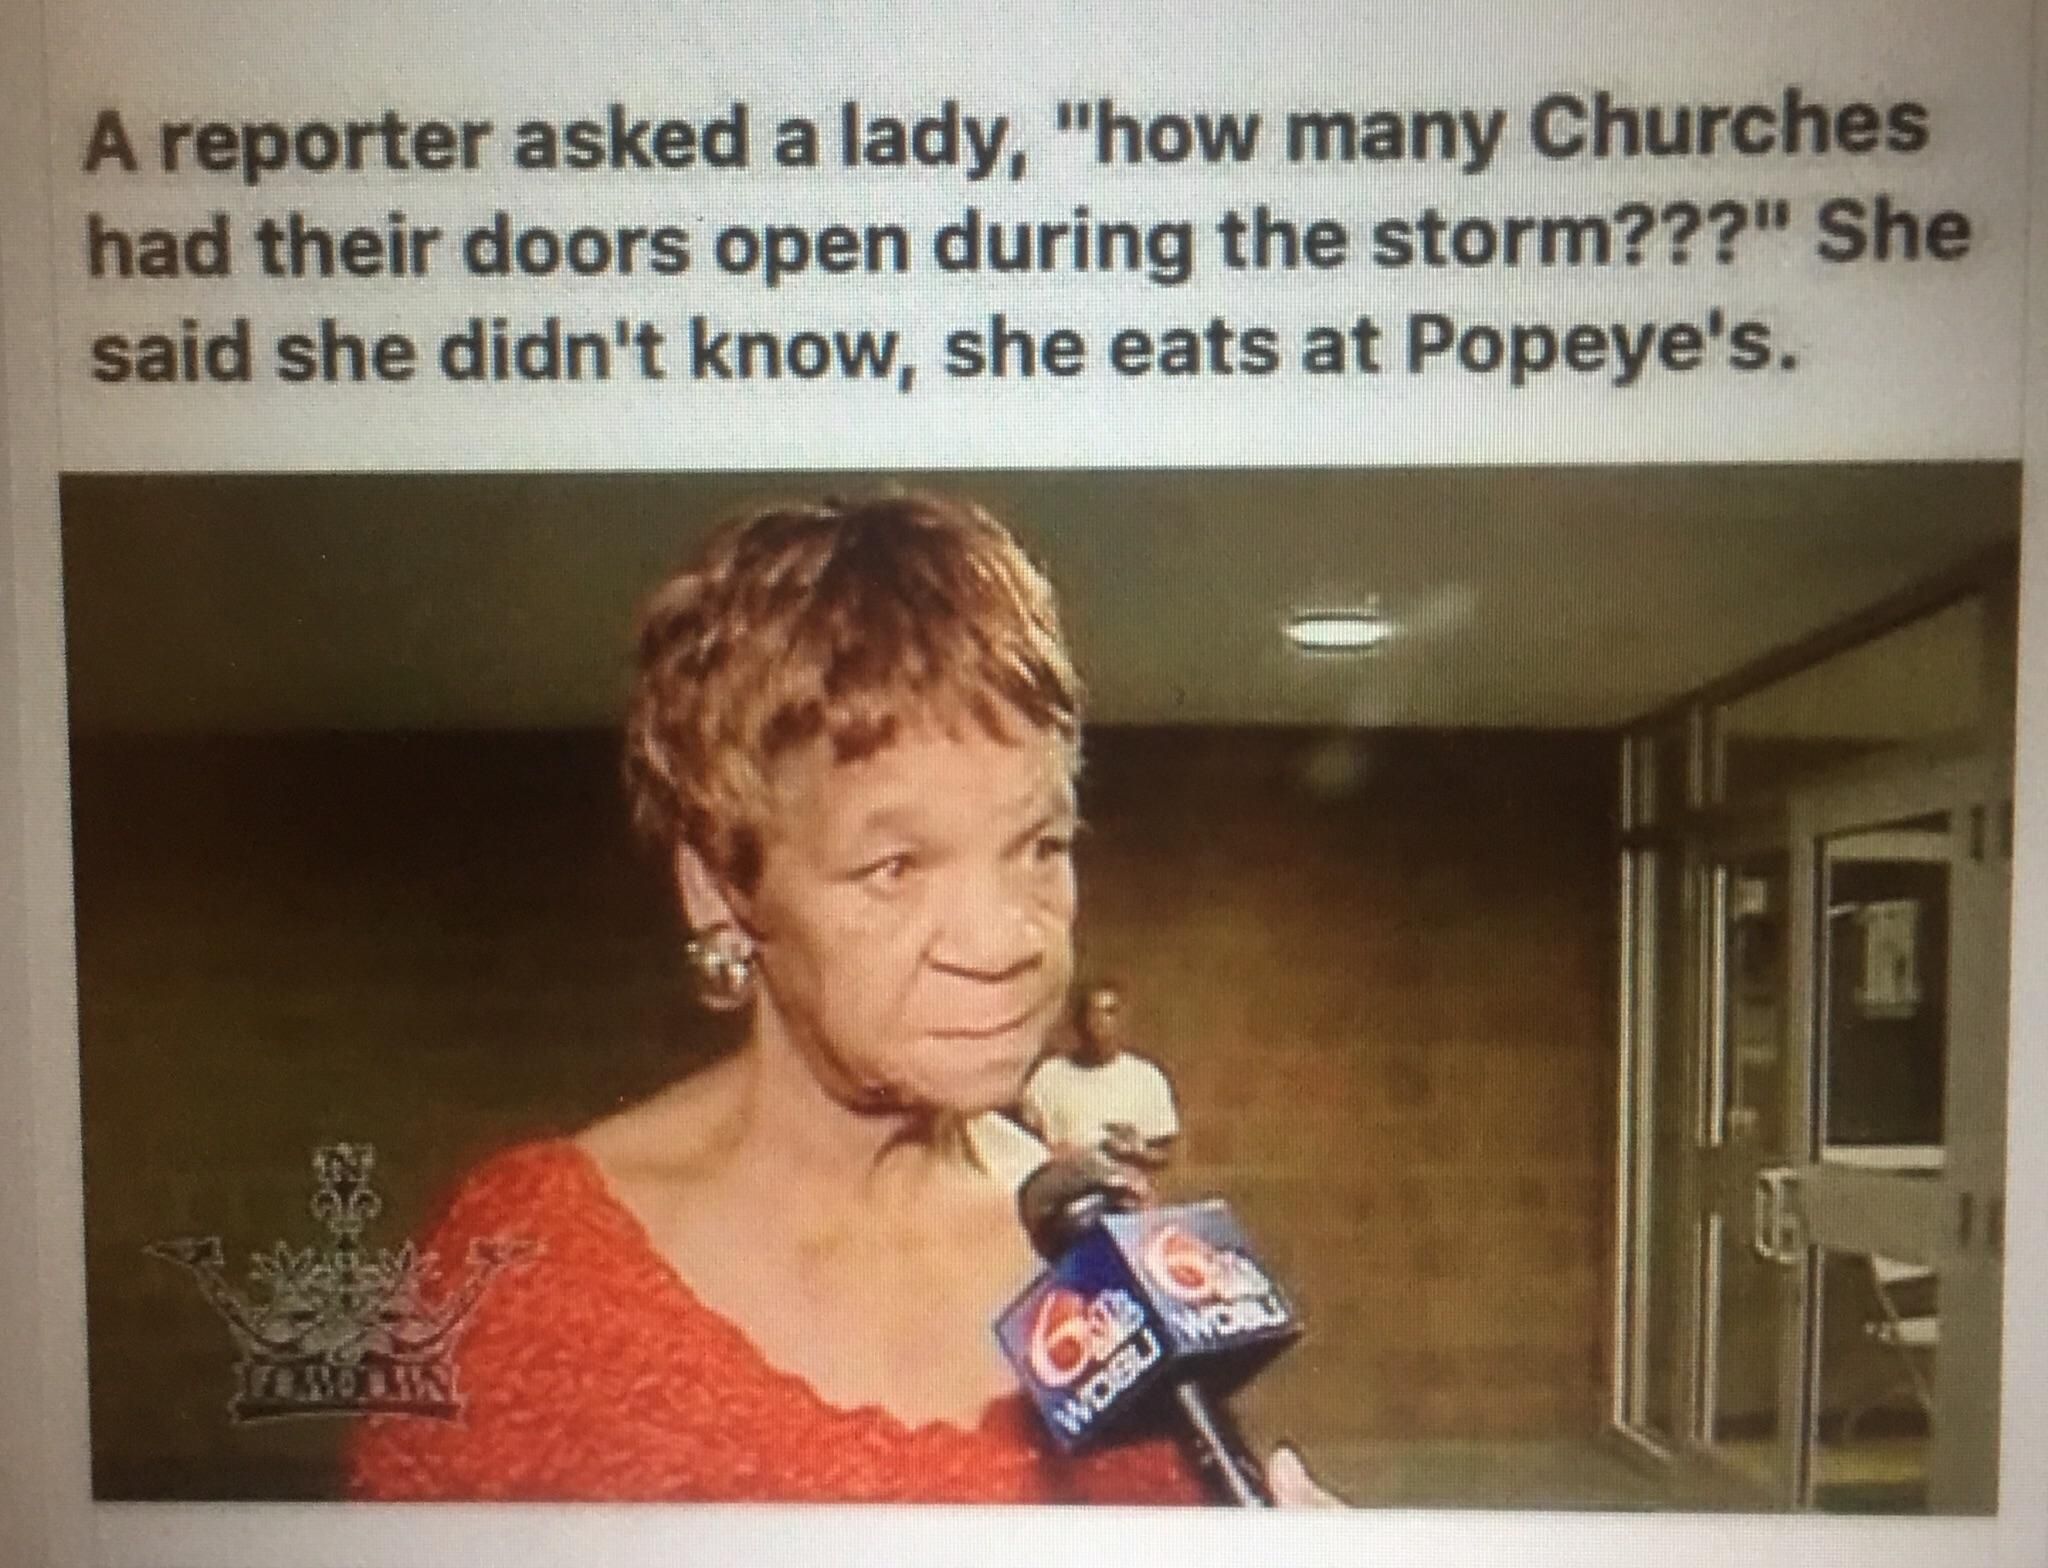 Churches or Popeyes?